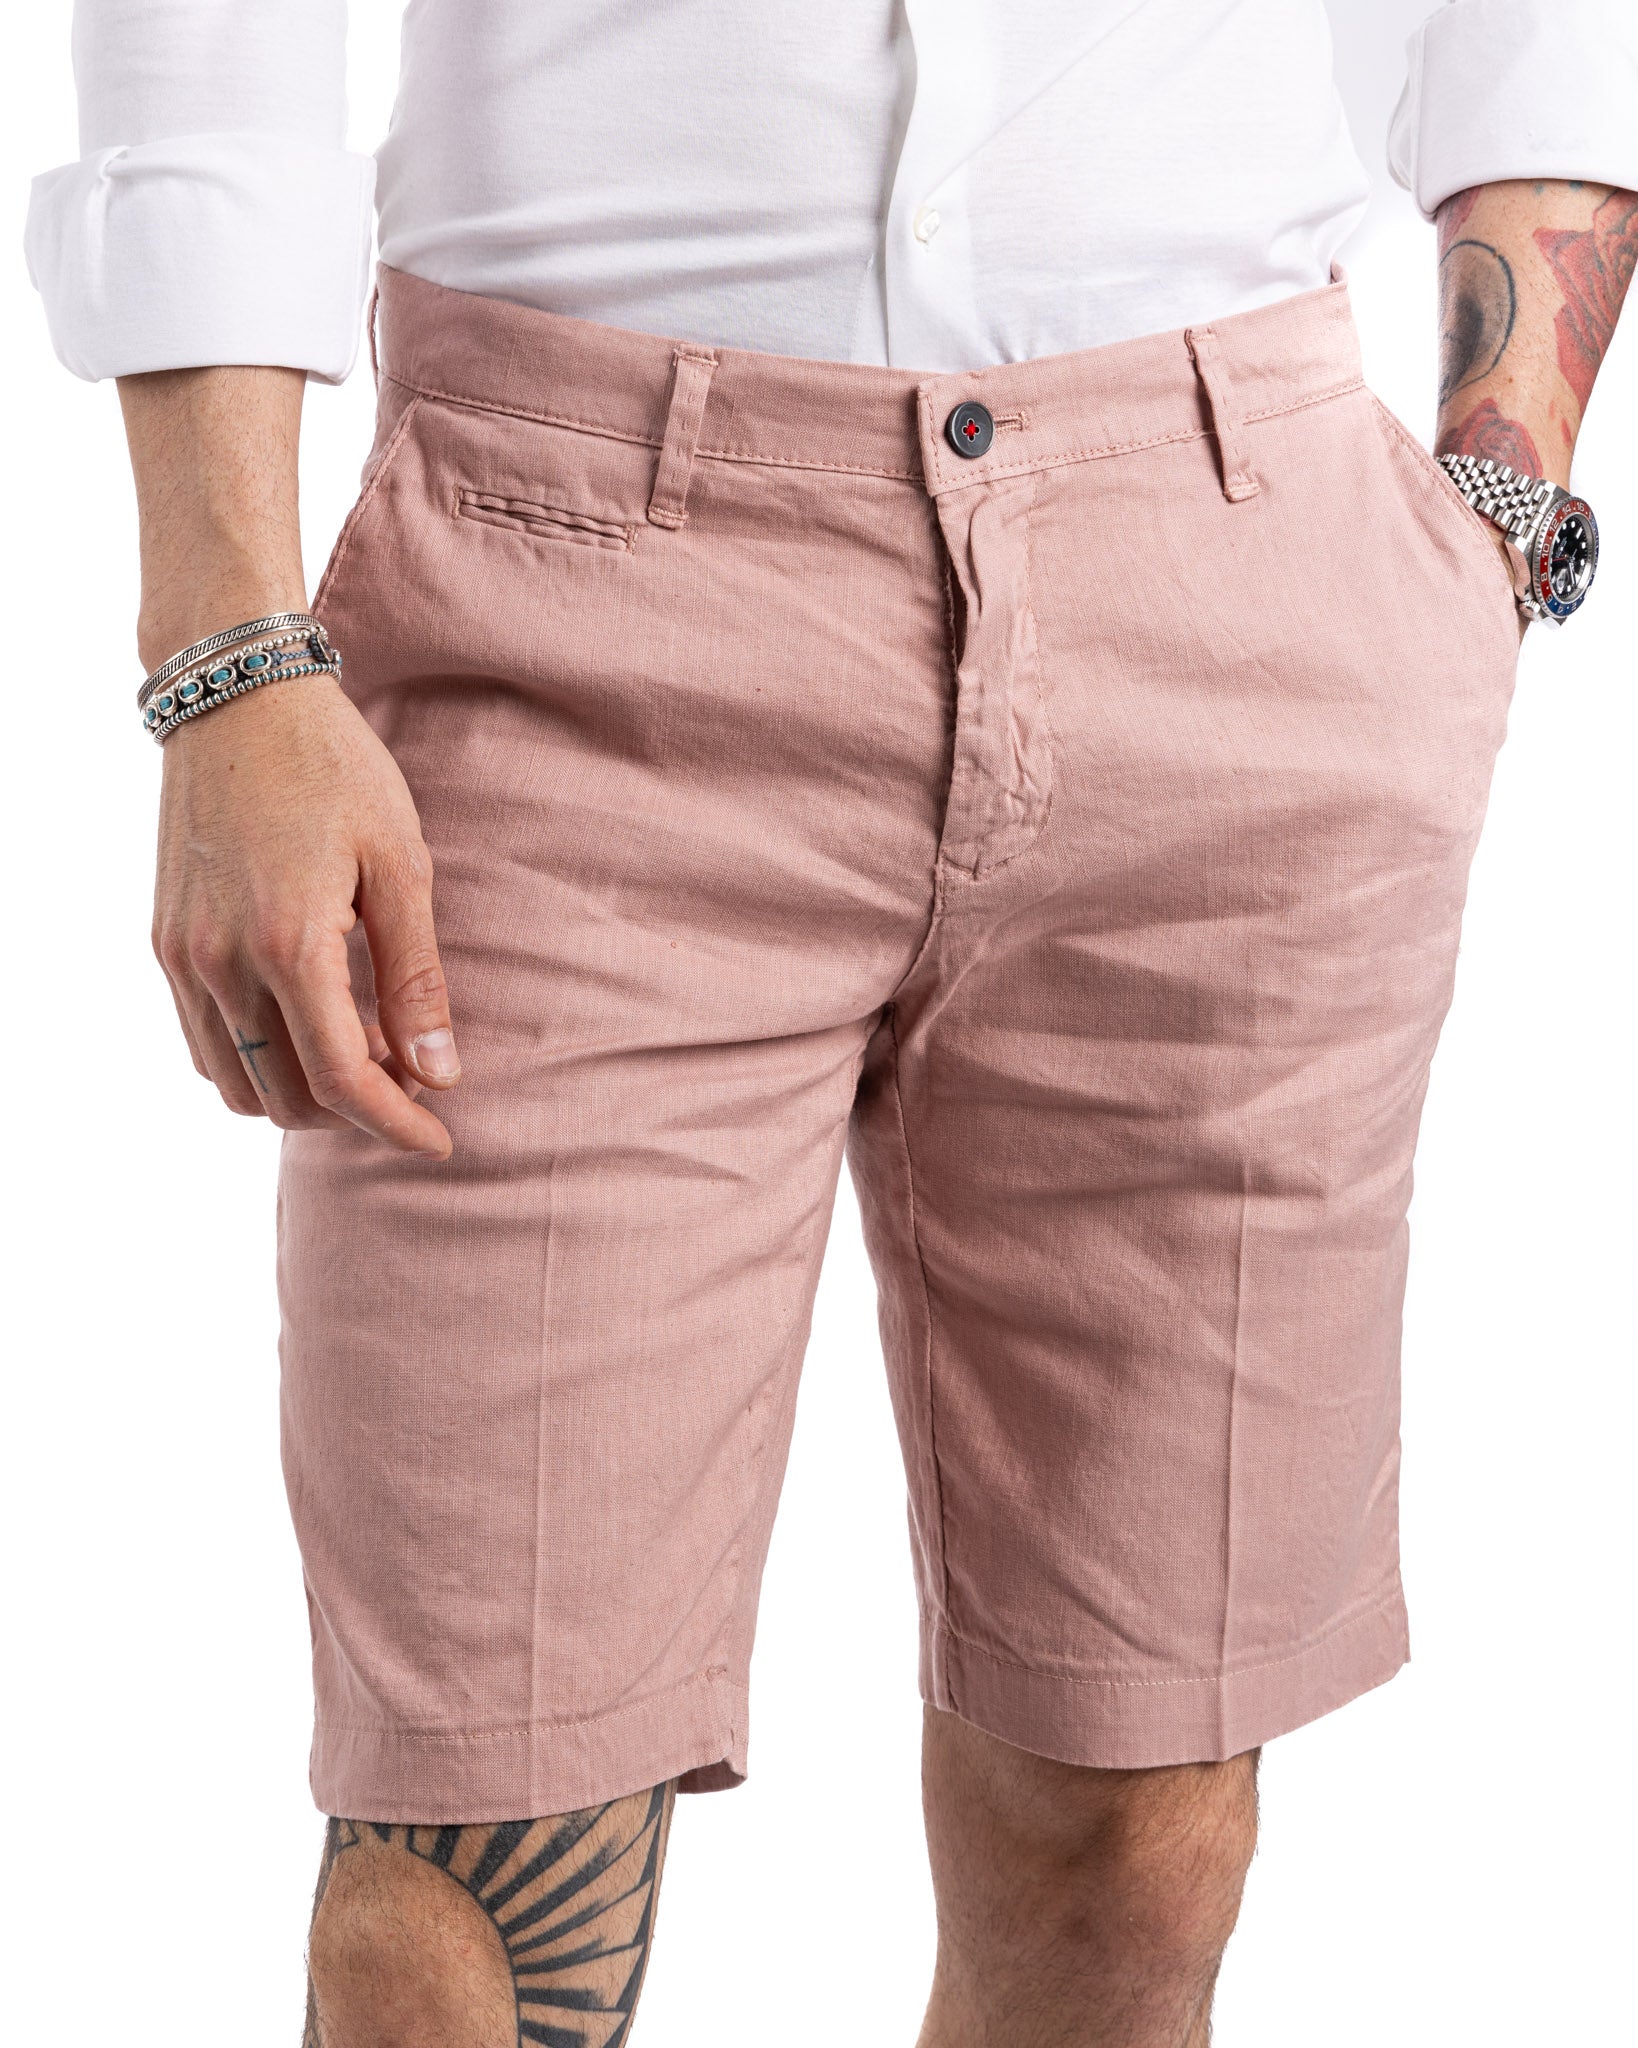 Mustique - pink stretch linen Bermuda shorts